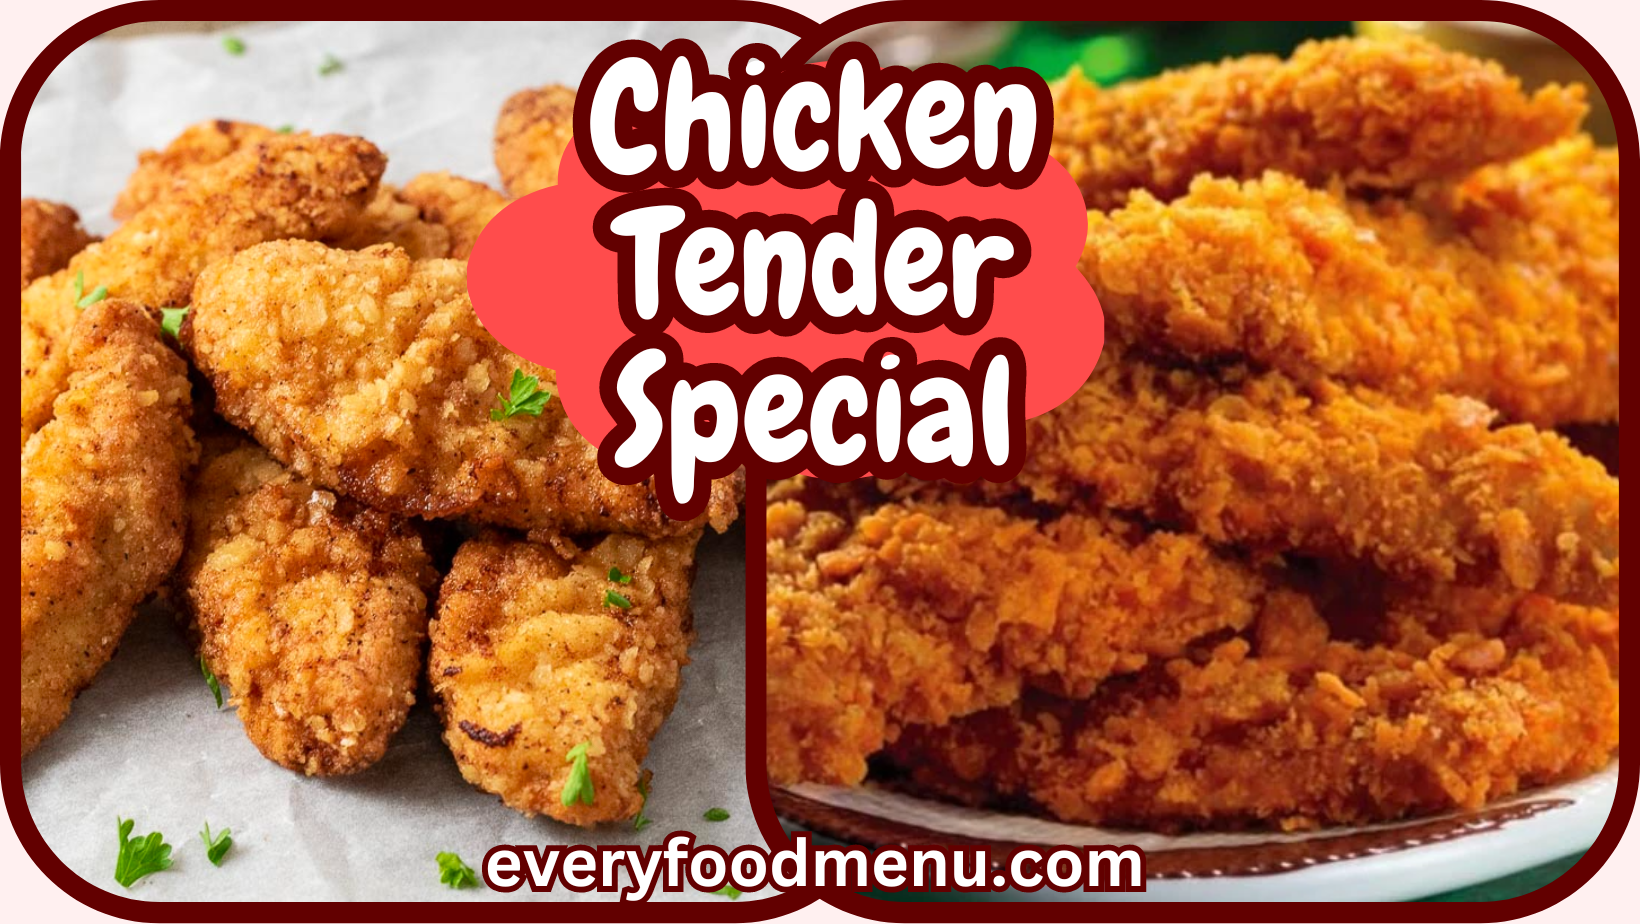 Chicken Tender Special